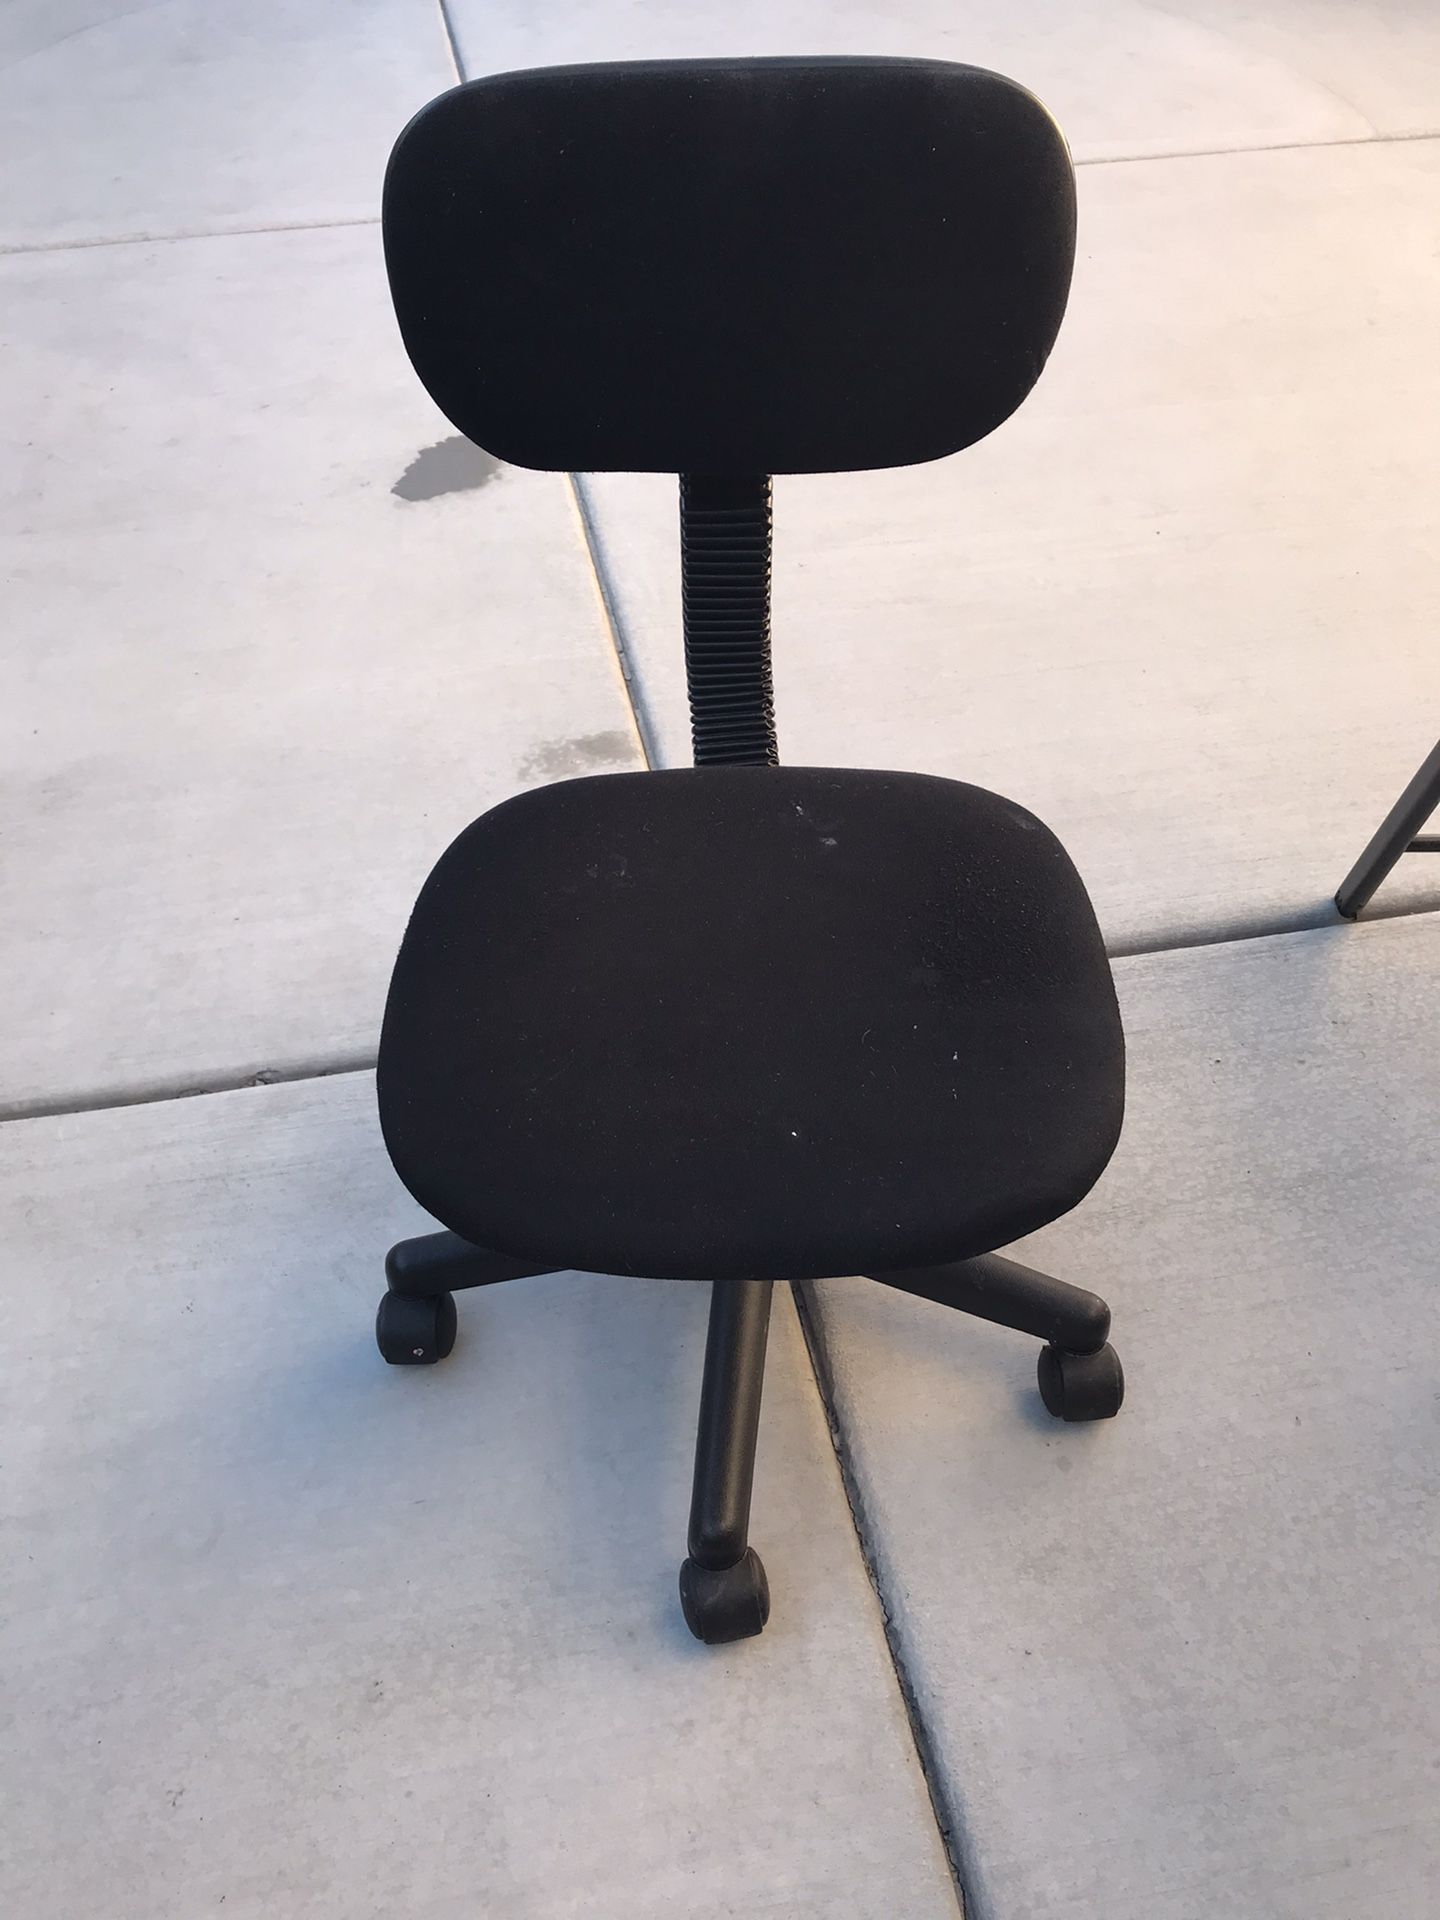 Non-adjustable kids chair